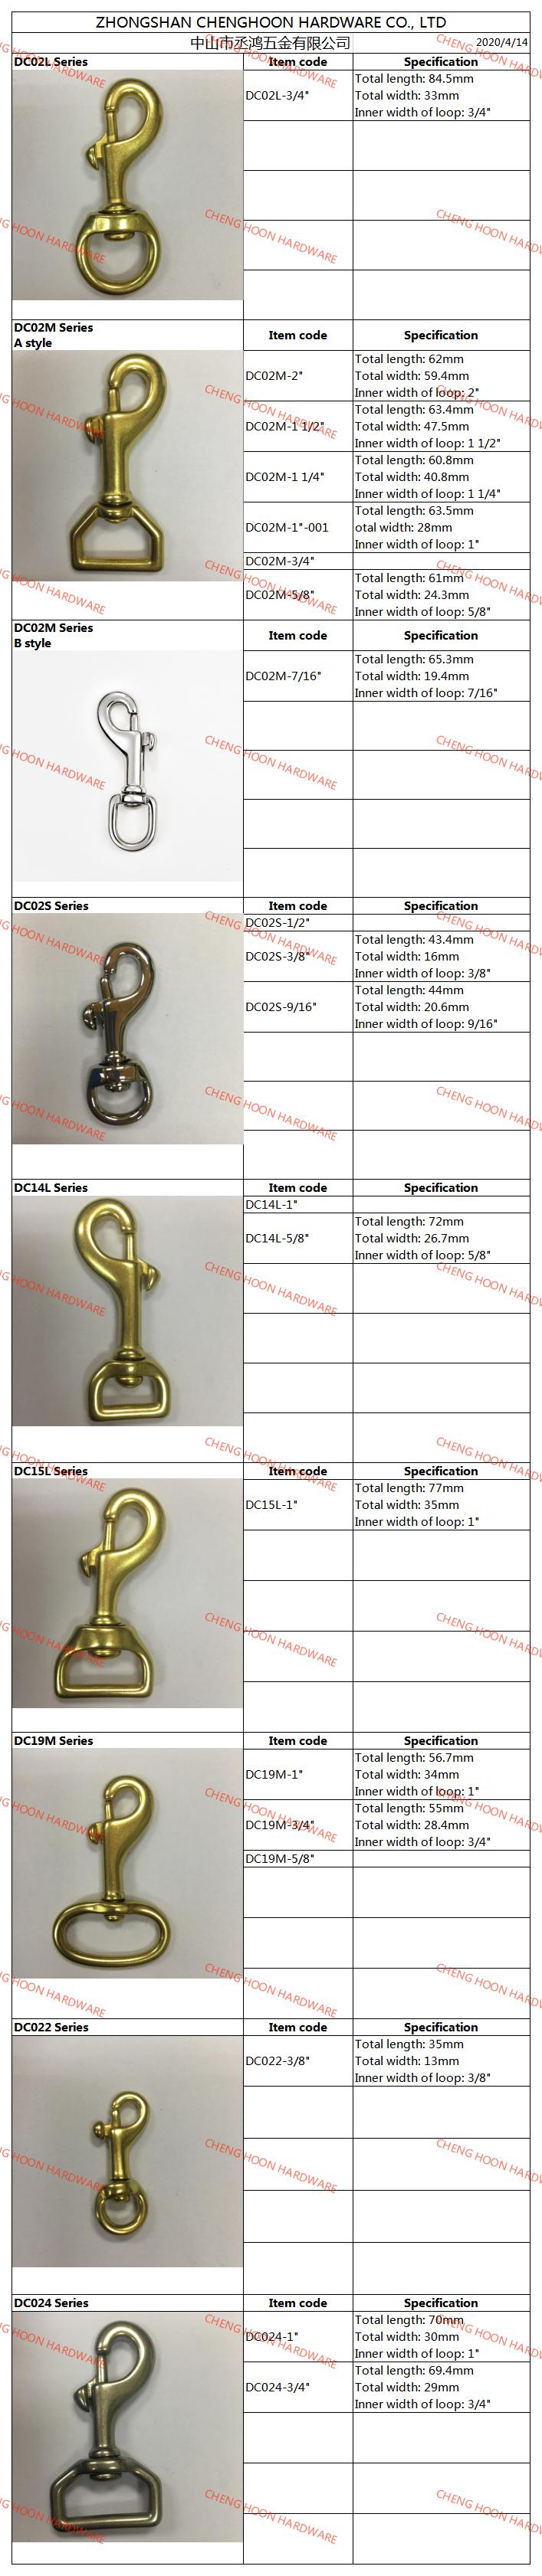 Solid brass dog clip hook